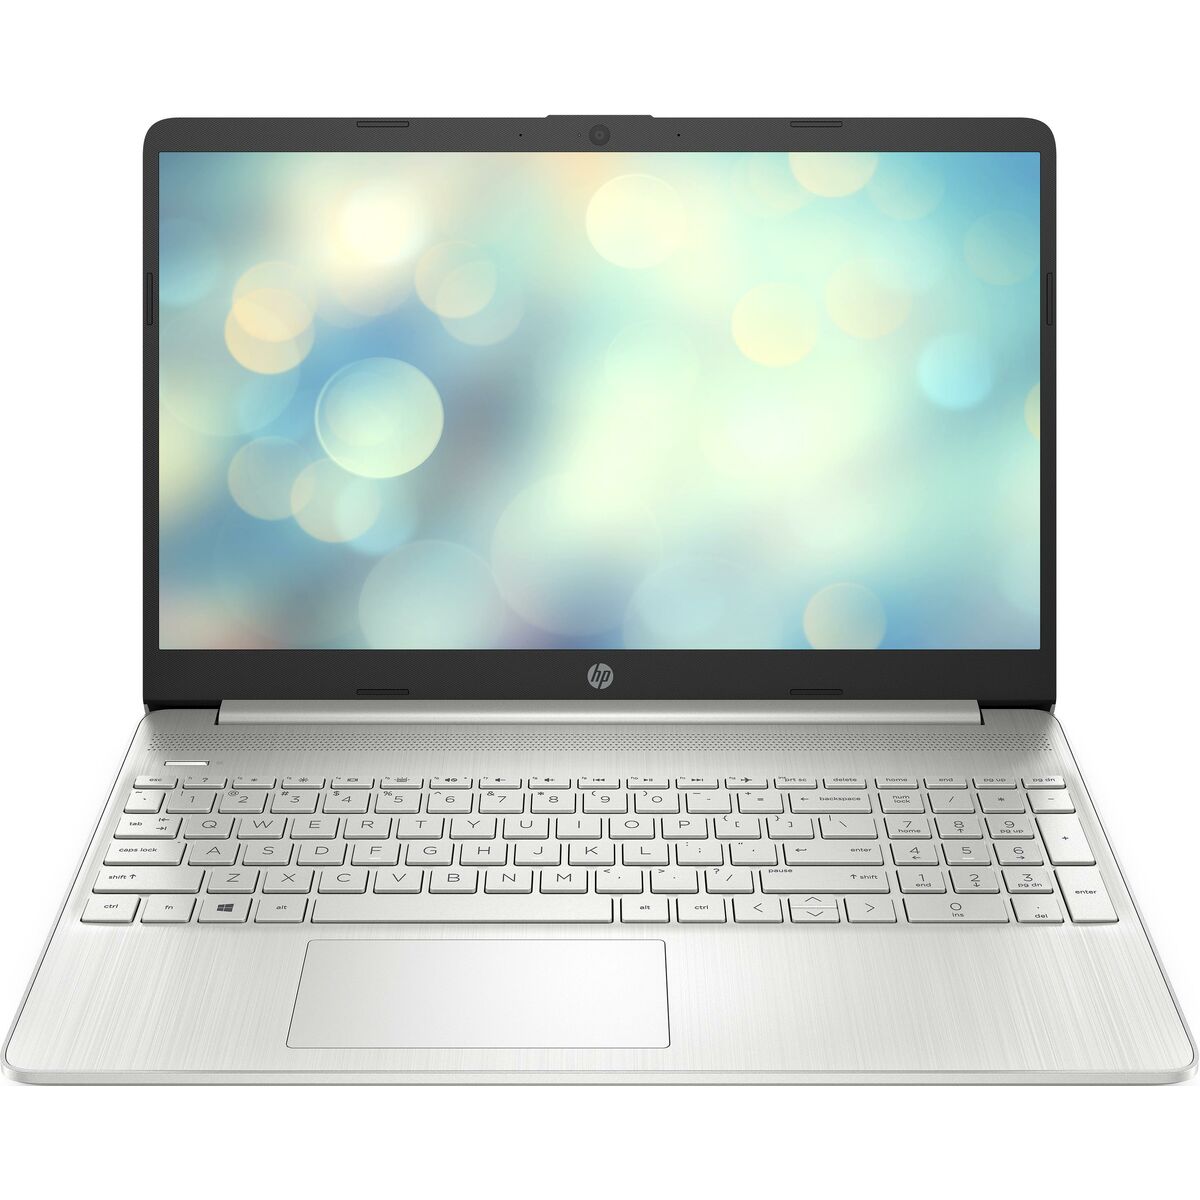 Laptop HP 15s-eq2102ns 8 GB RAM 256 GB AMD Ryzen 5 5500U, HP, Computing, notebook-hp-15s-eq2102ns-15-6-amd-ryzen-5-5500u-256-gb-ssd-8-gb-8-gb-ram-256-gb, :2-in-1, :256 GB, :AMD Ryzen 5, :QWERTY, :RAM 16 GB, :Touchscreen, Brand_HP, category-reference-2609, category-reference-2791, category-reference-2797, category-reference-t-19685, Condition_NEW, office, Price_500 - 600, Teleworking, RiotNook